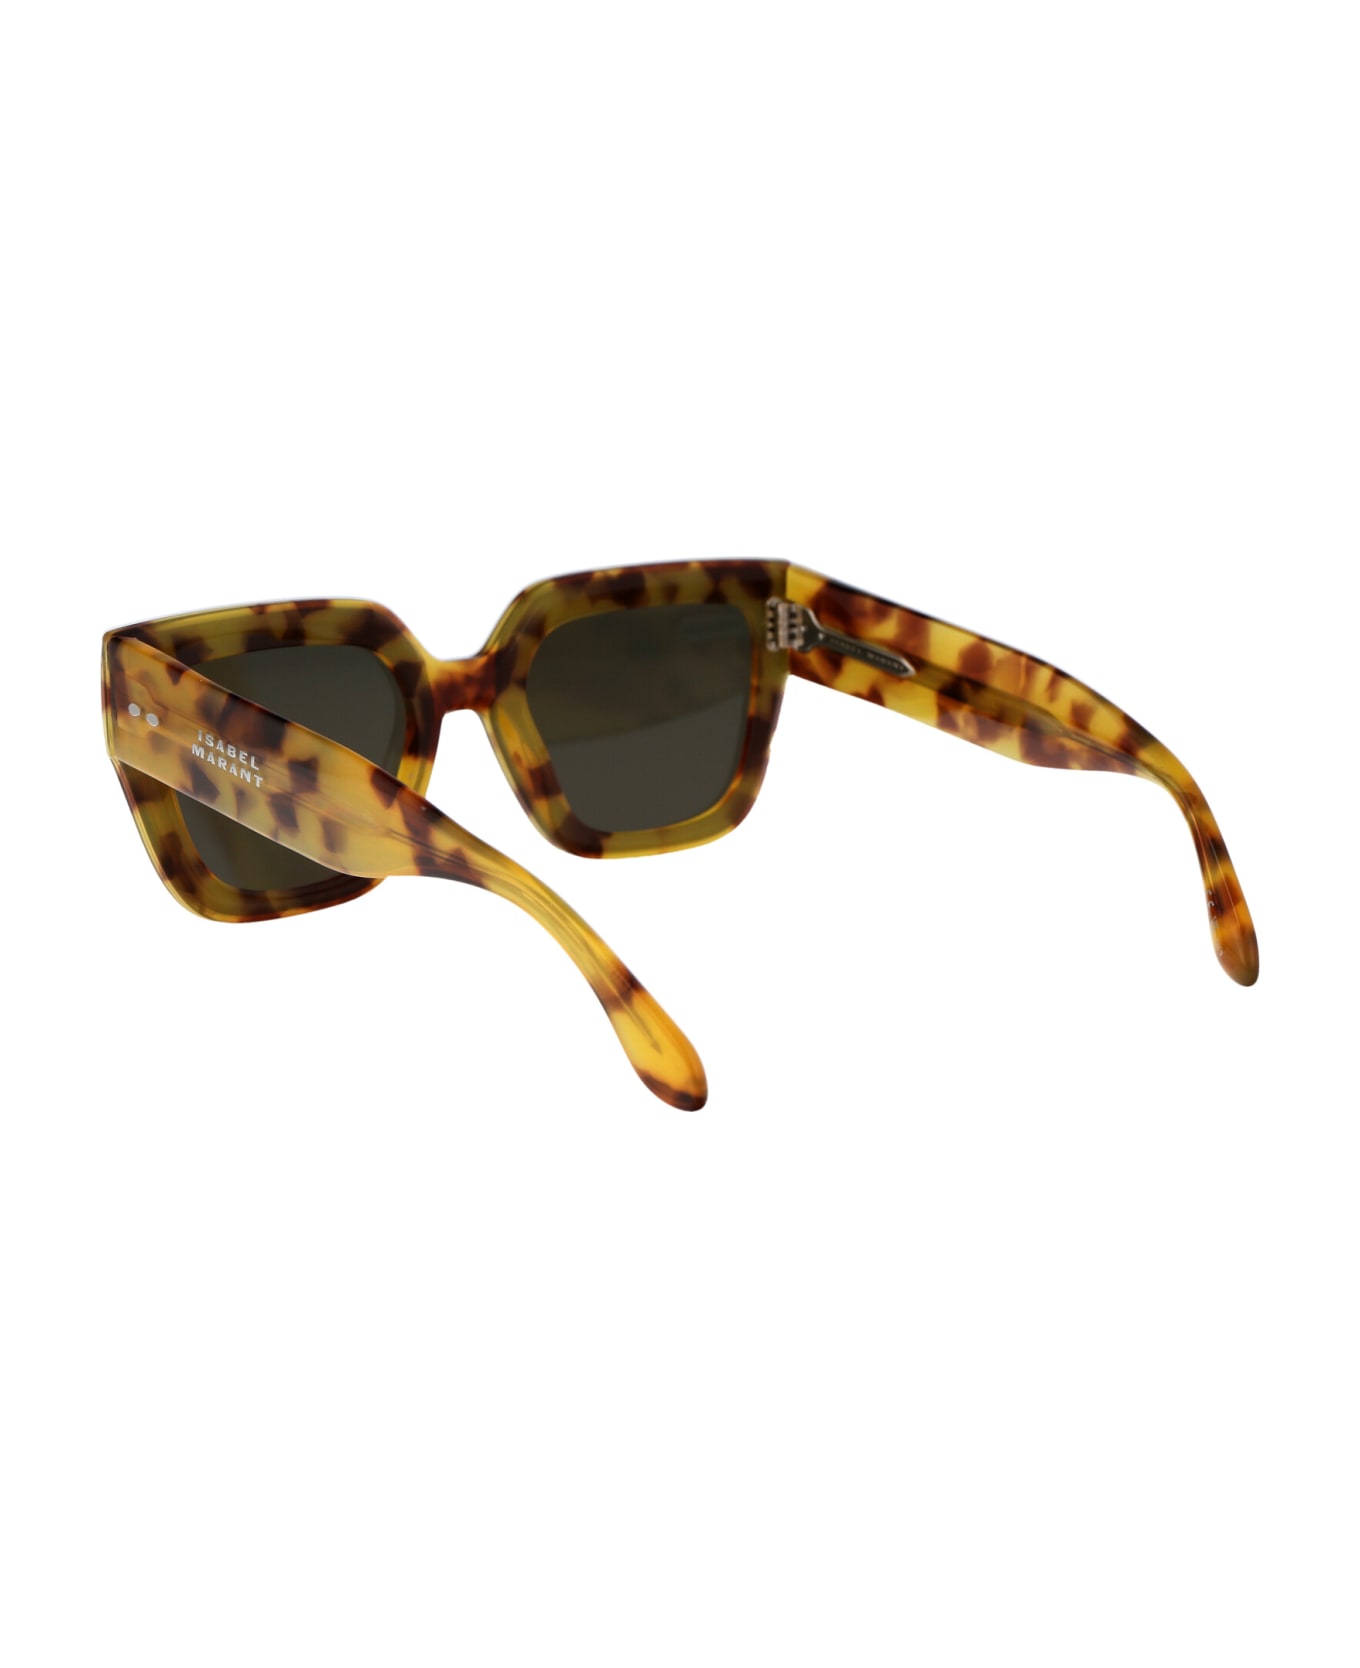 Isabel Marant Im 0170/s Sunglasses - C9BQT HVN HONEY サングラス